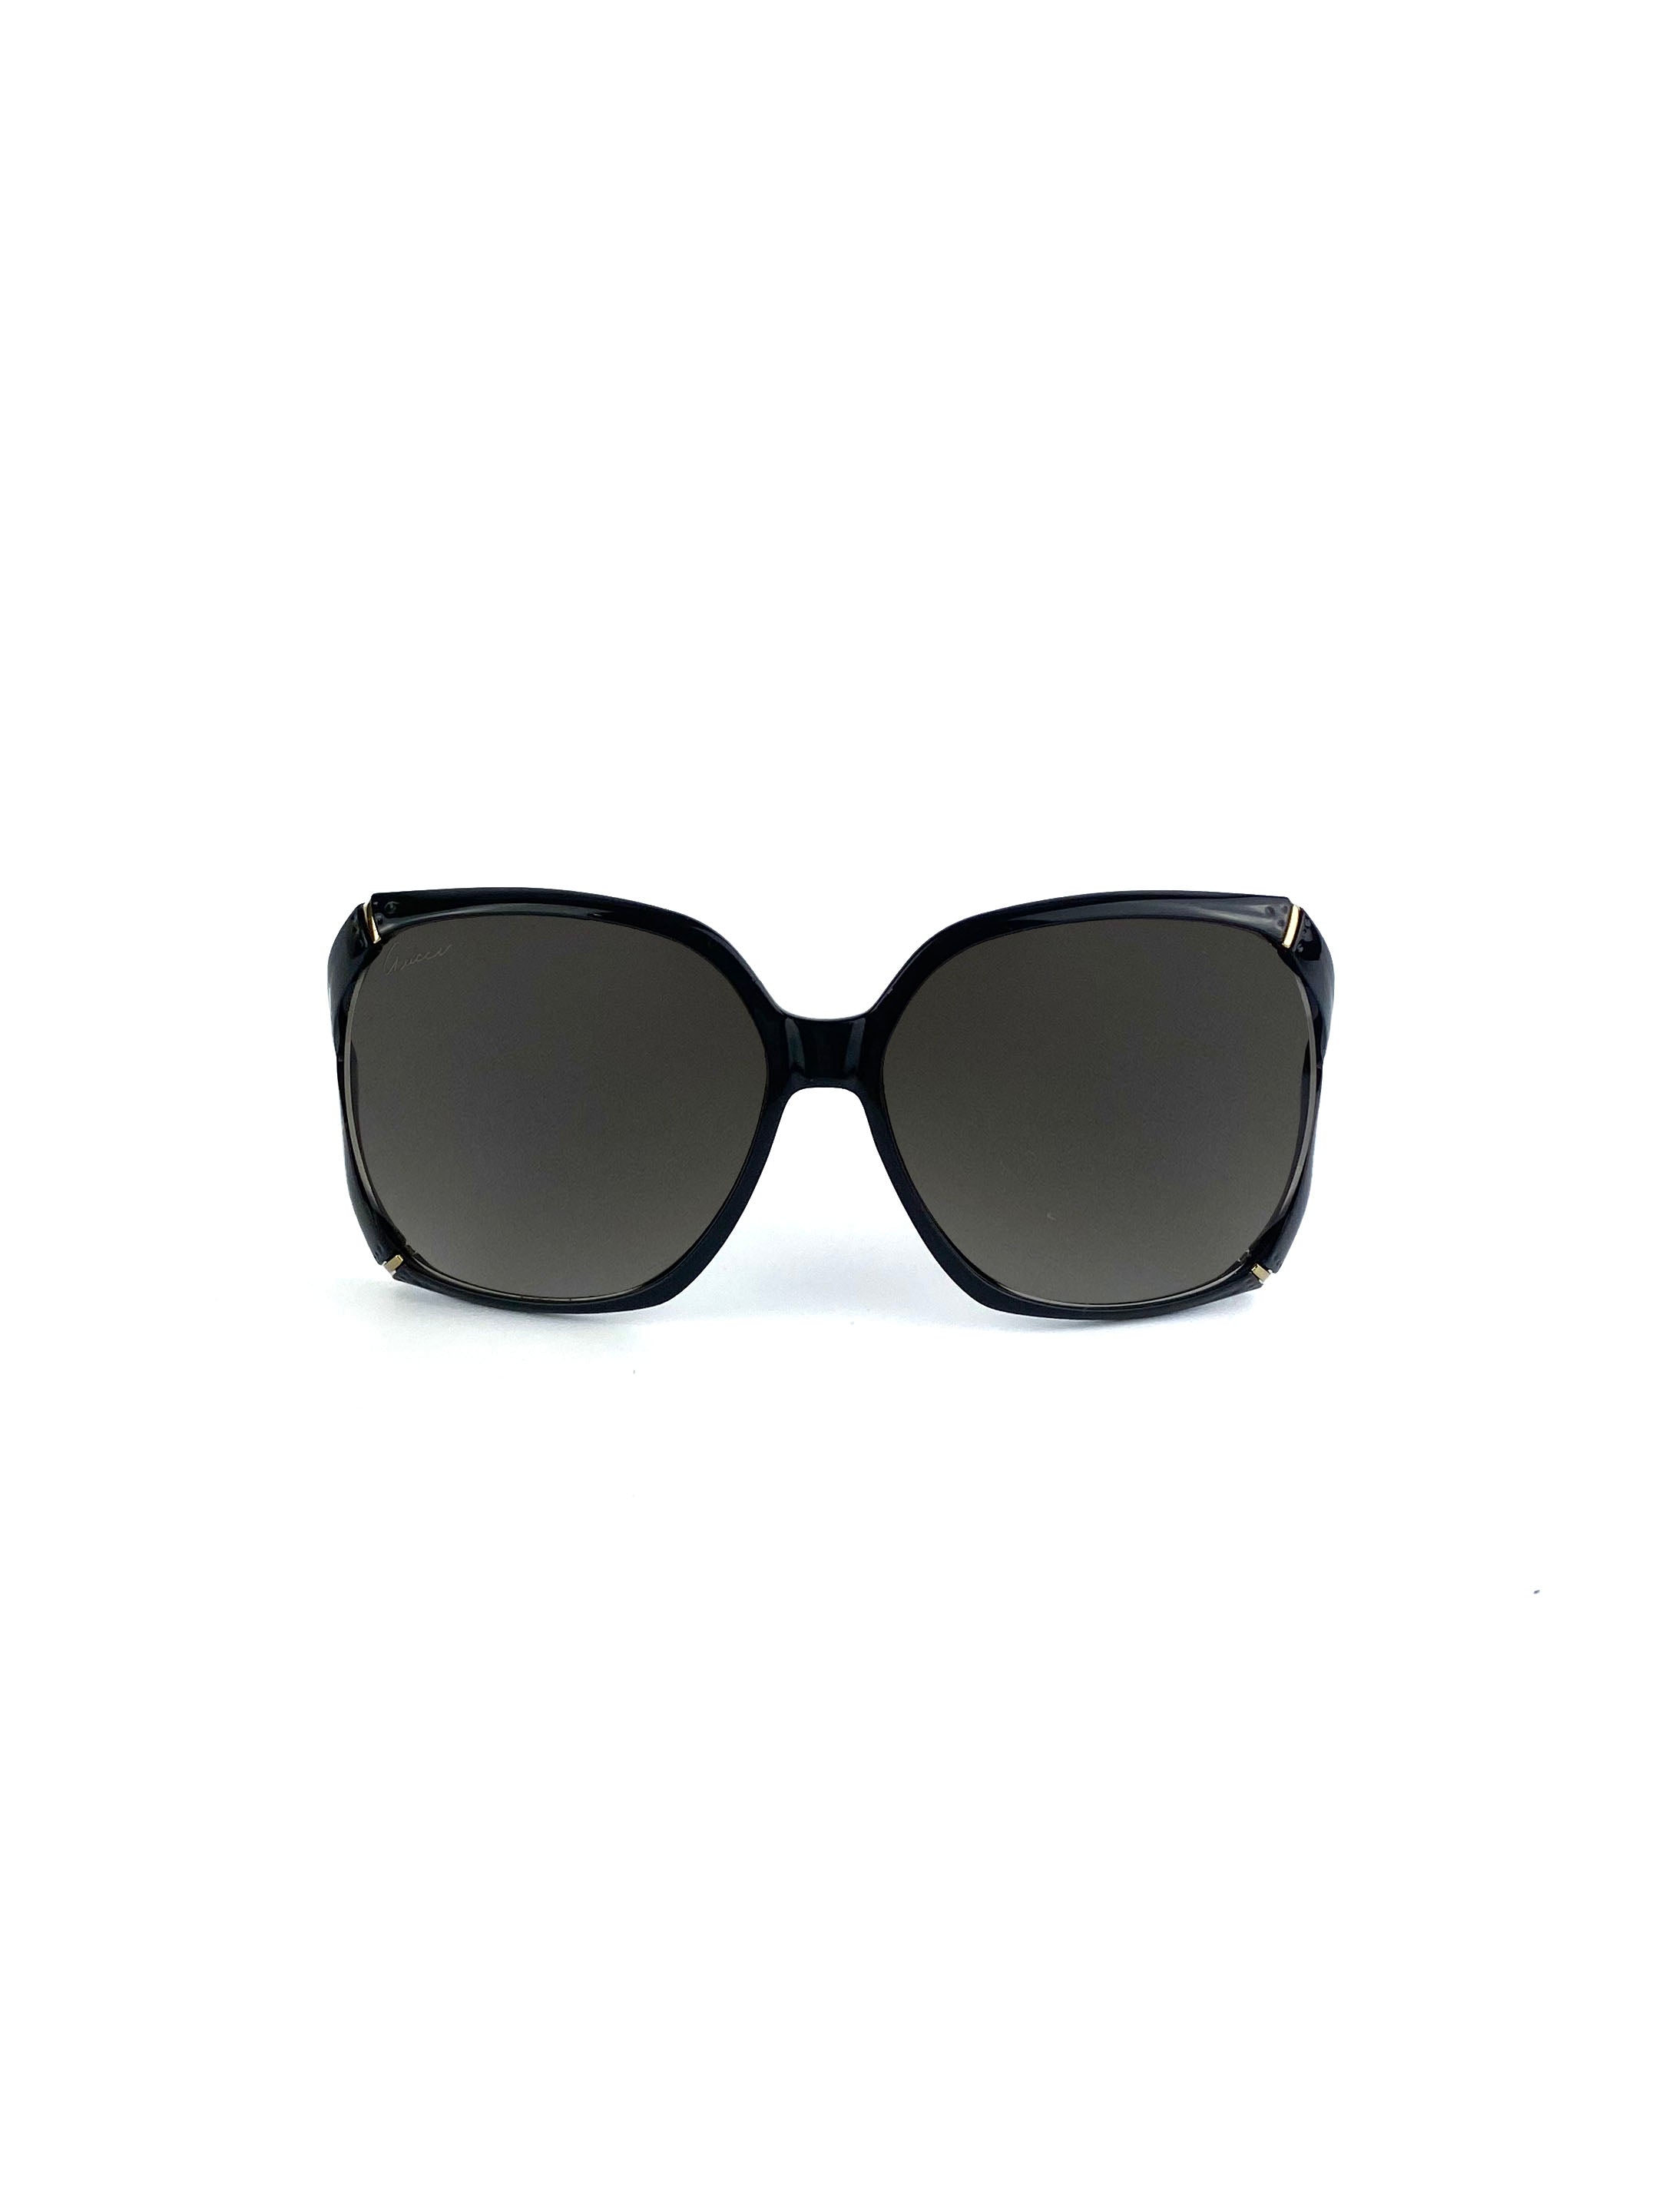 gucci-bamboo-sunglasses-1.jpg